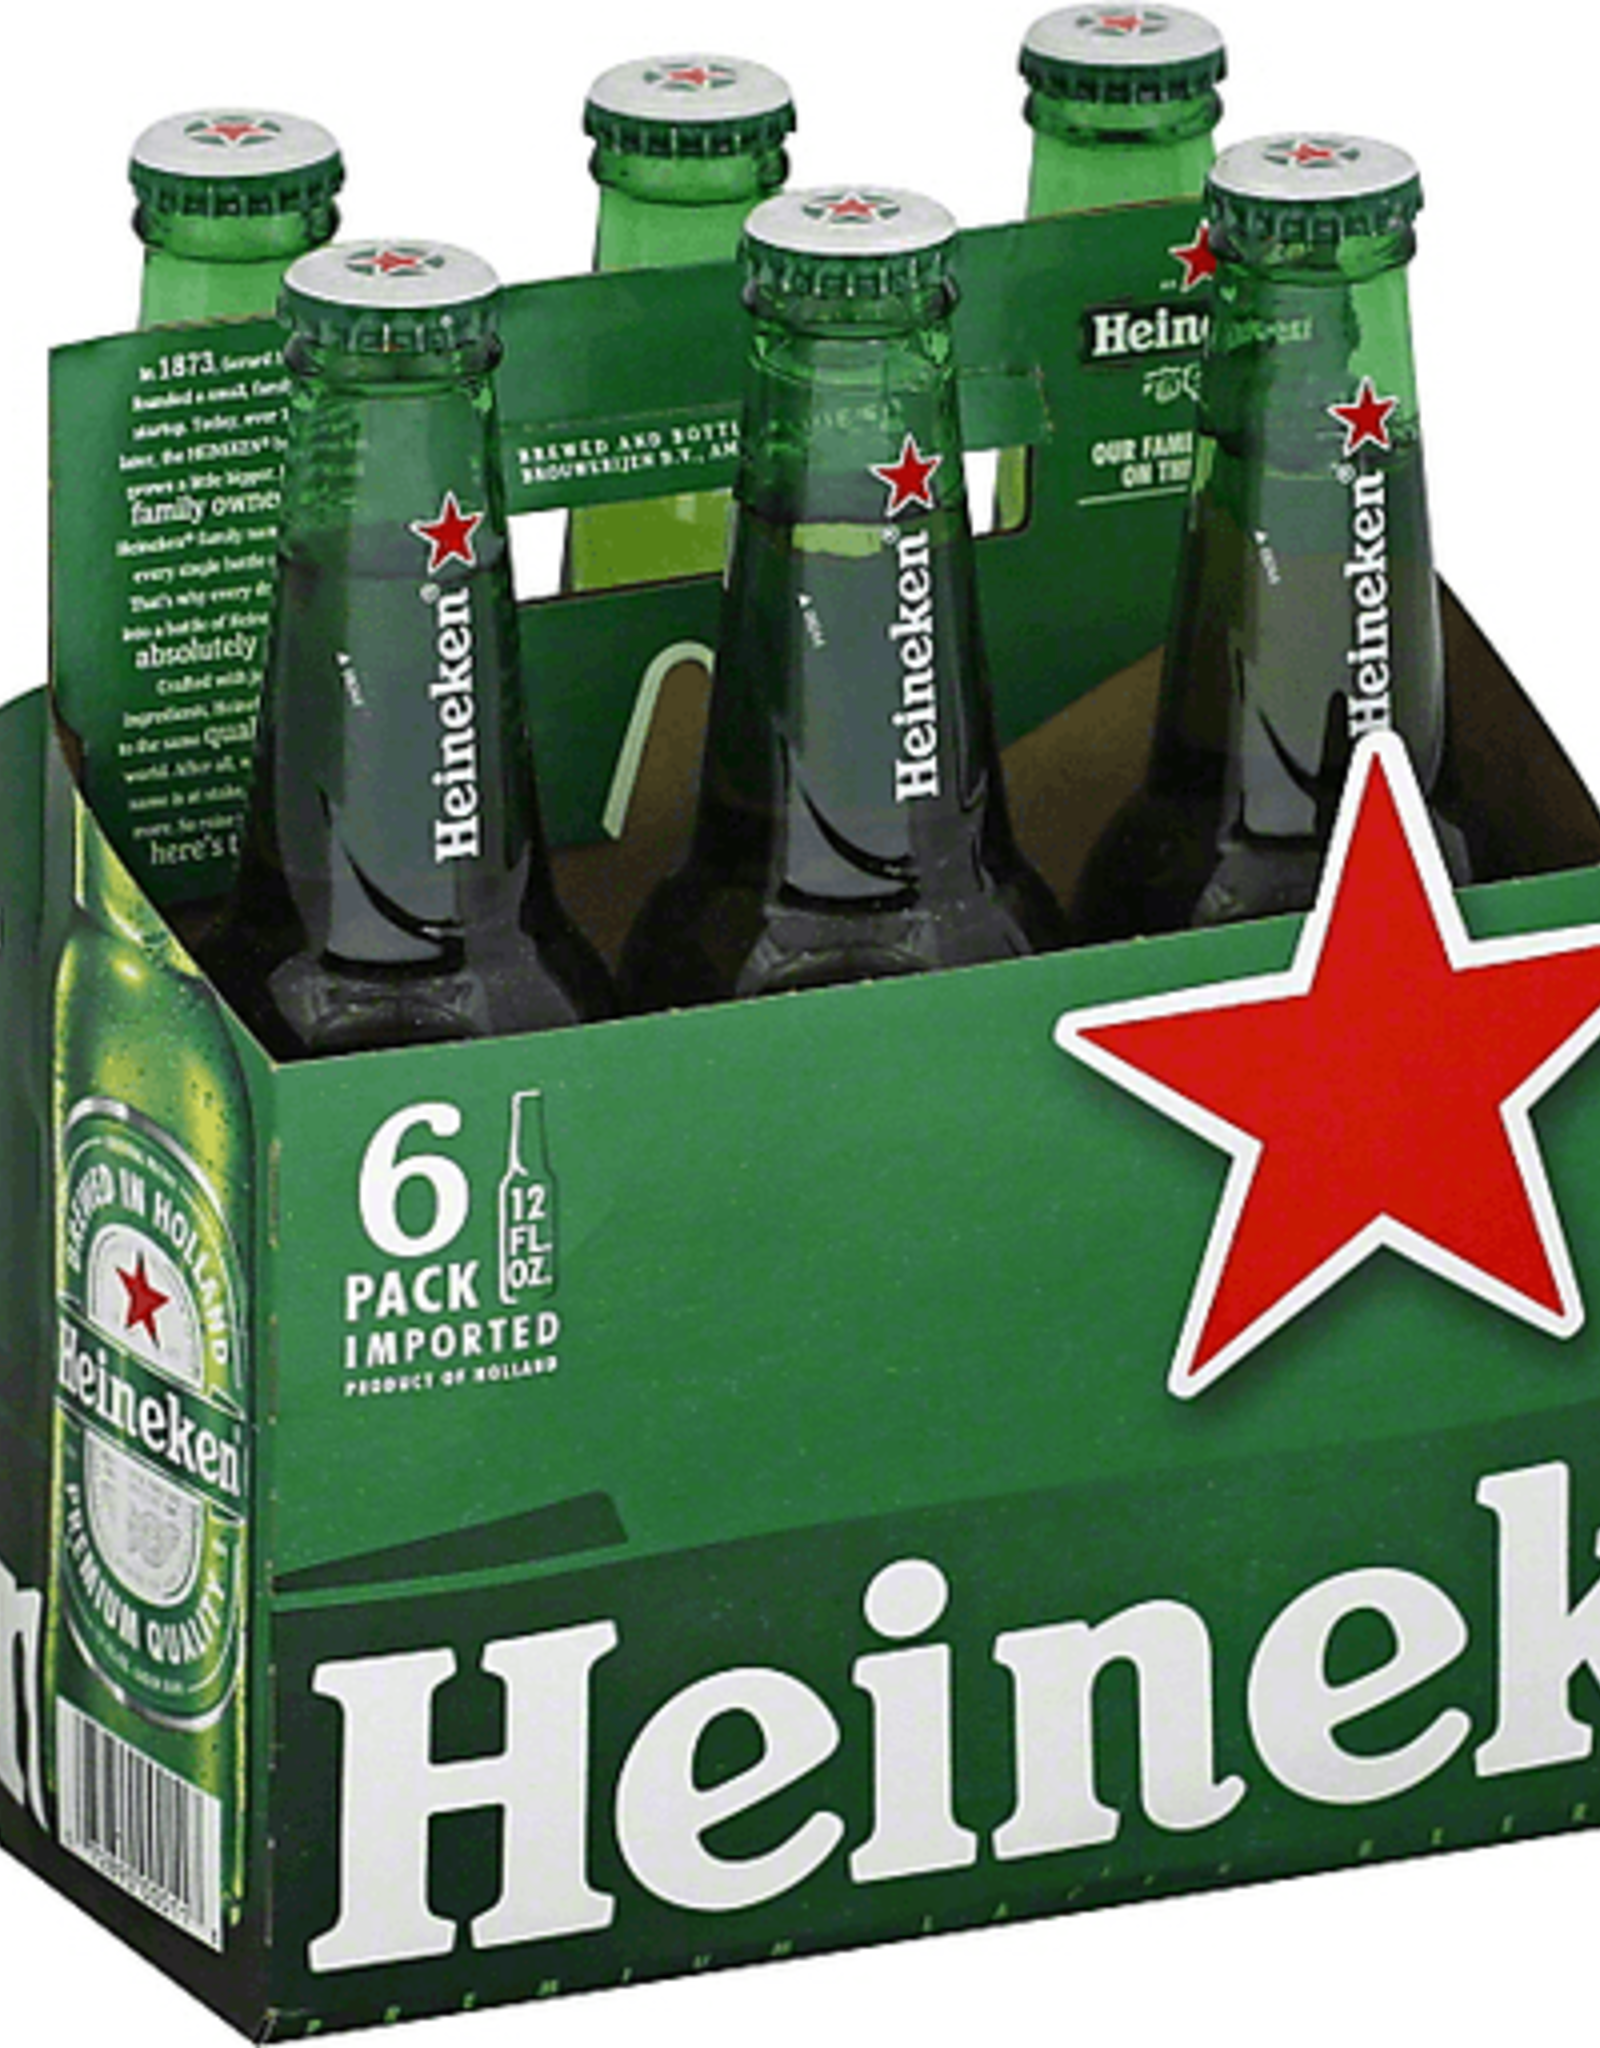 Heineken Heineken Bottle